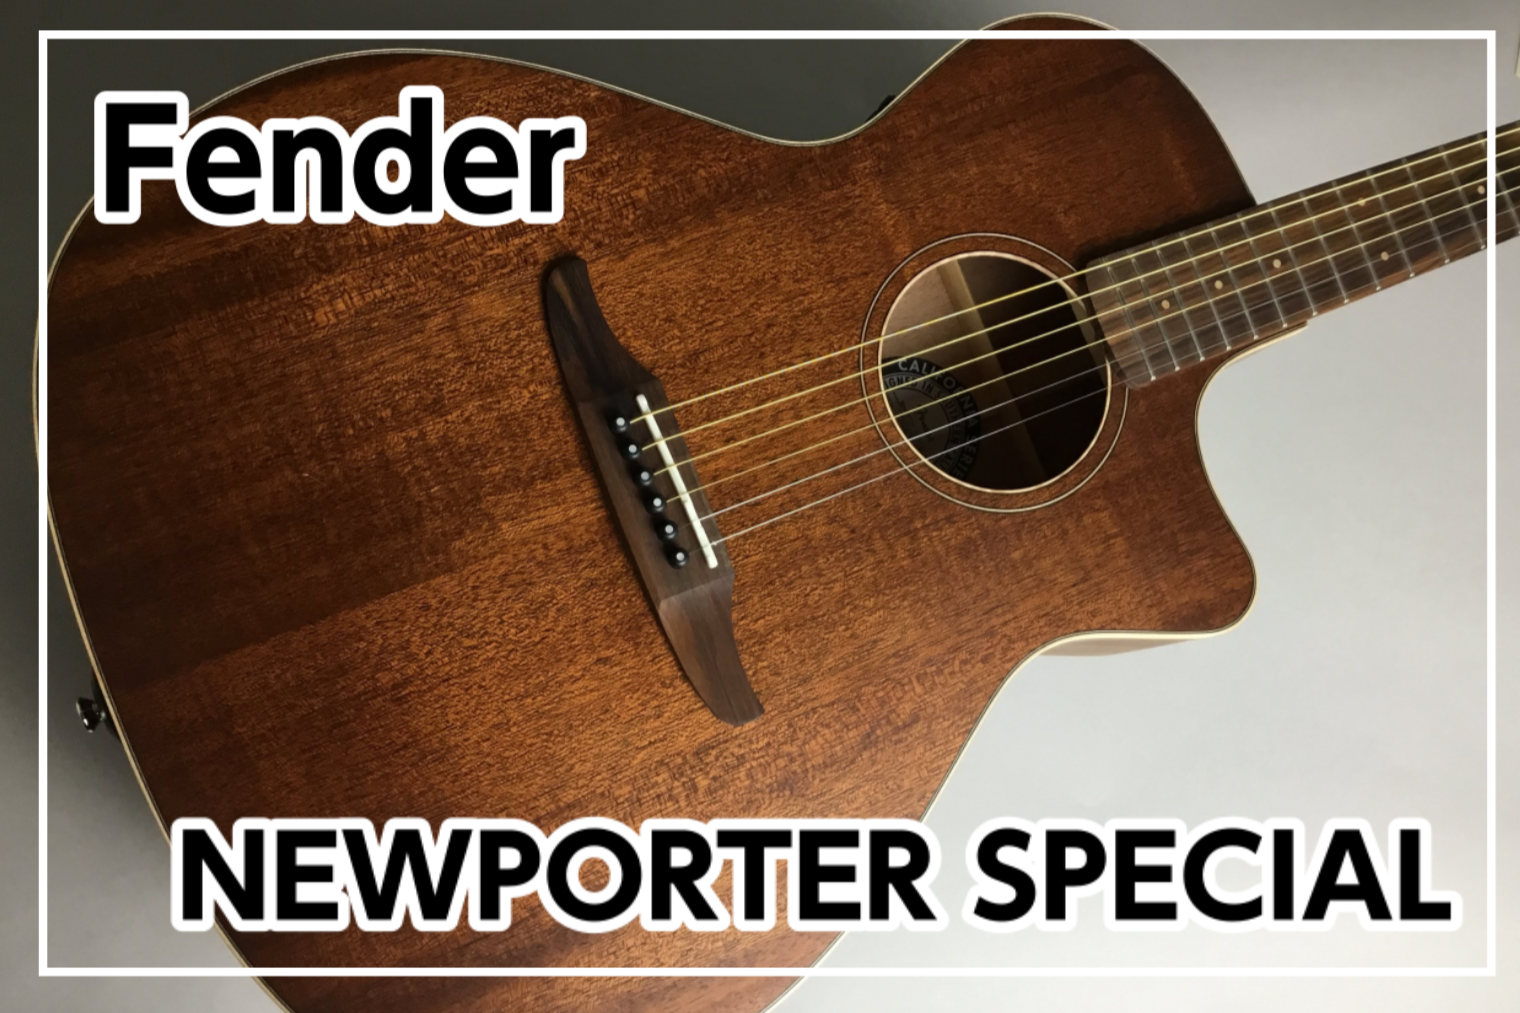 *Fender(フェンダー) NEWPORTER SPECIAL入荷!! Newporter Specialは、大胆なルックスと刺激的なサウンドで個性的な創造性を発揮します。 **MENU [#a:title=商品紹介] [#b:title=価格] [#c:title=問合せ] ===a=== ** […]